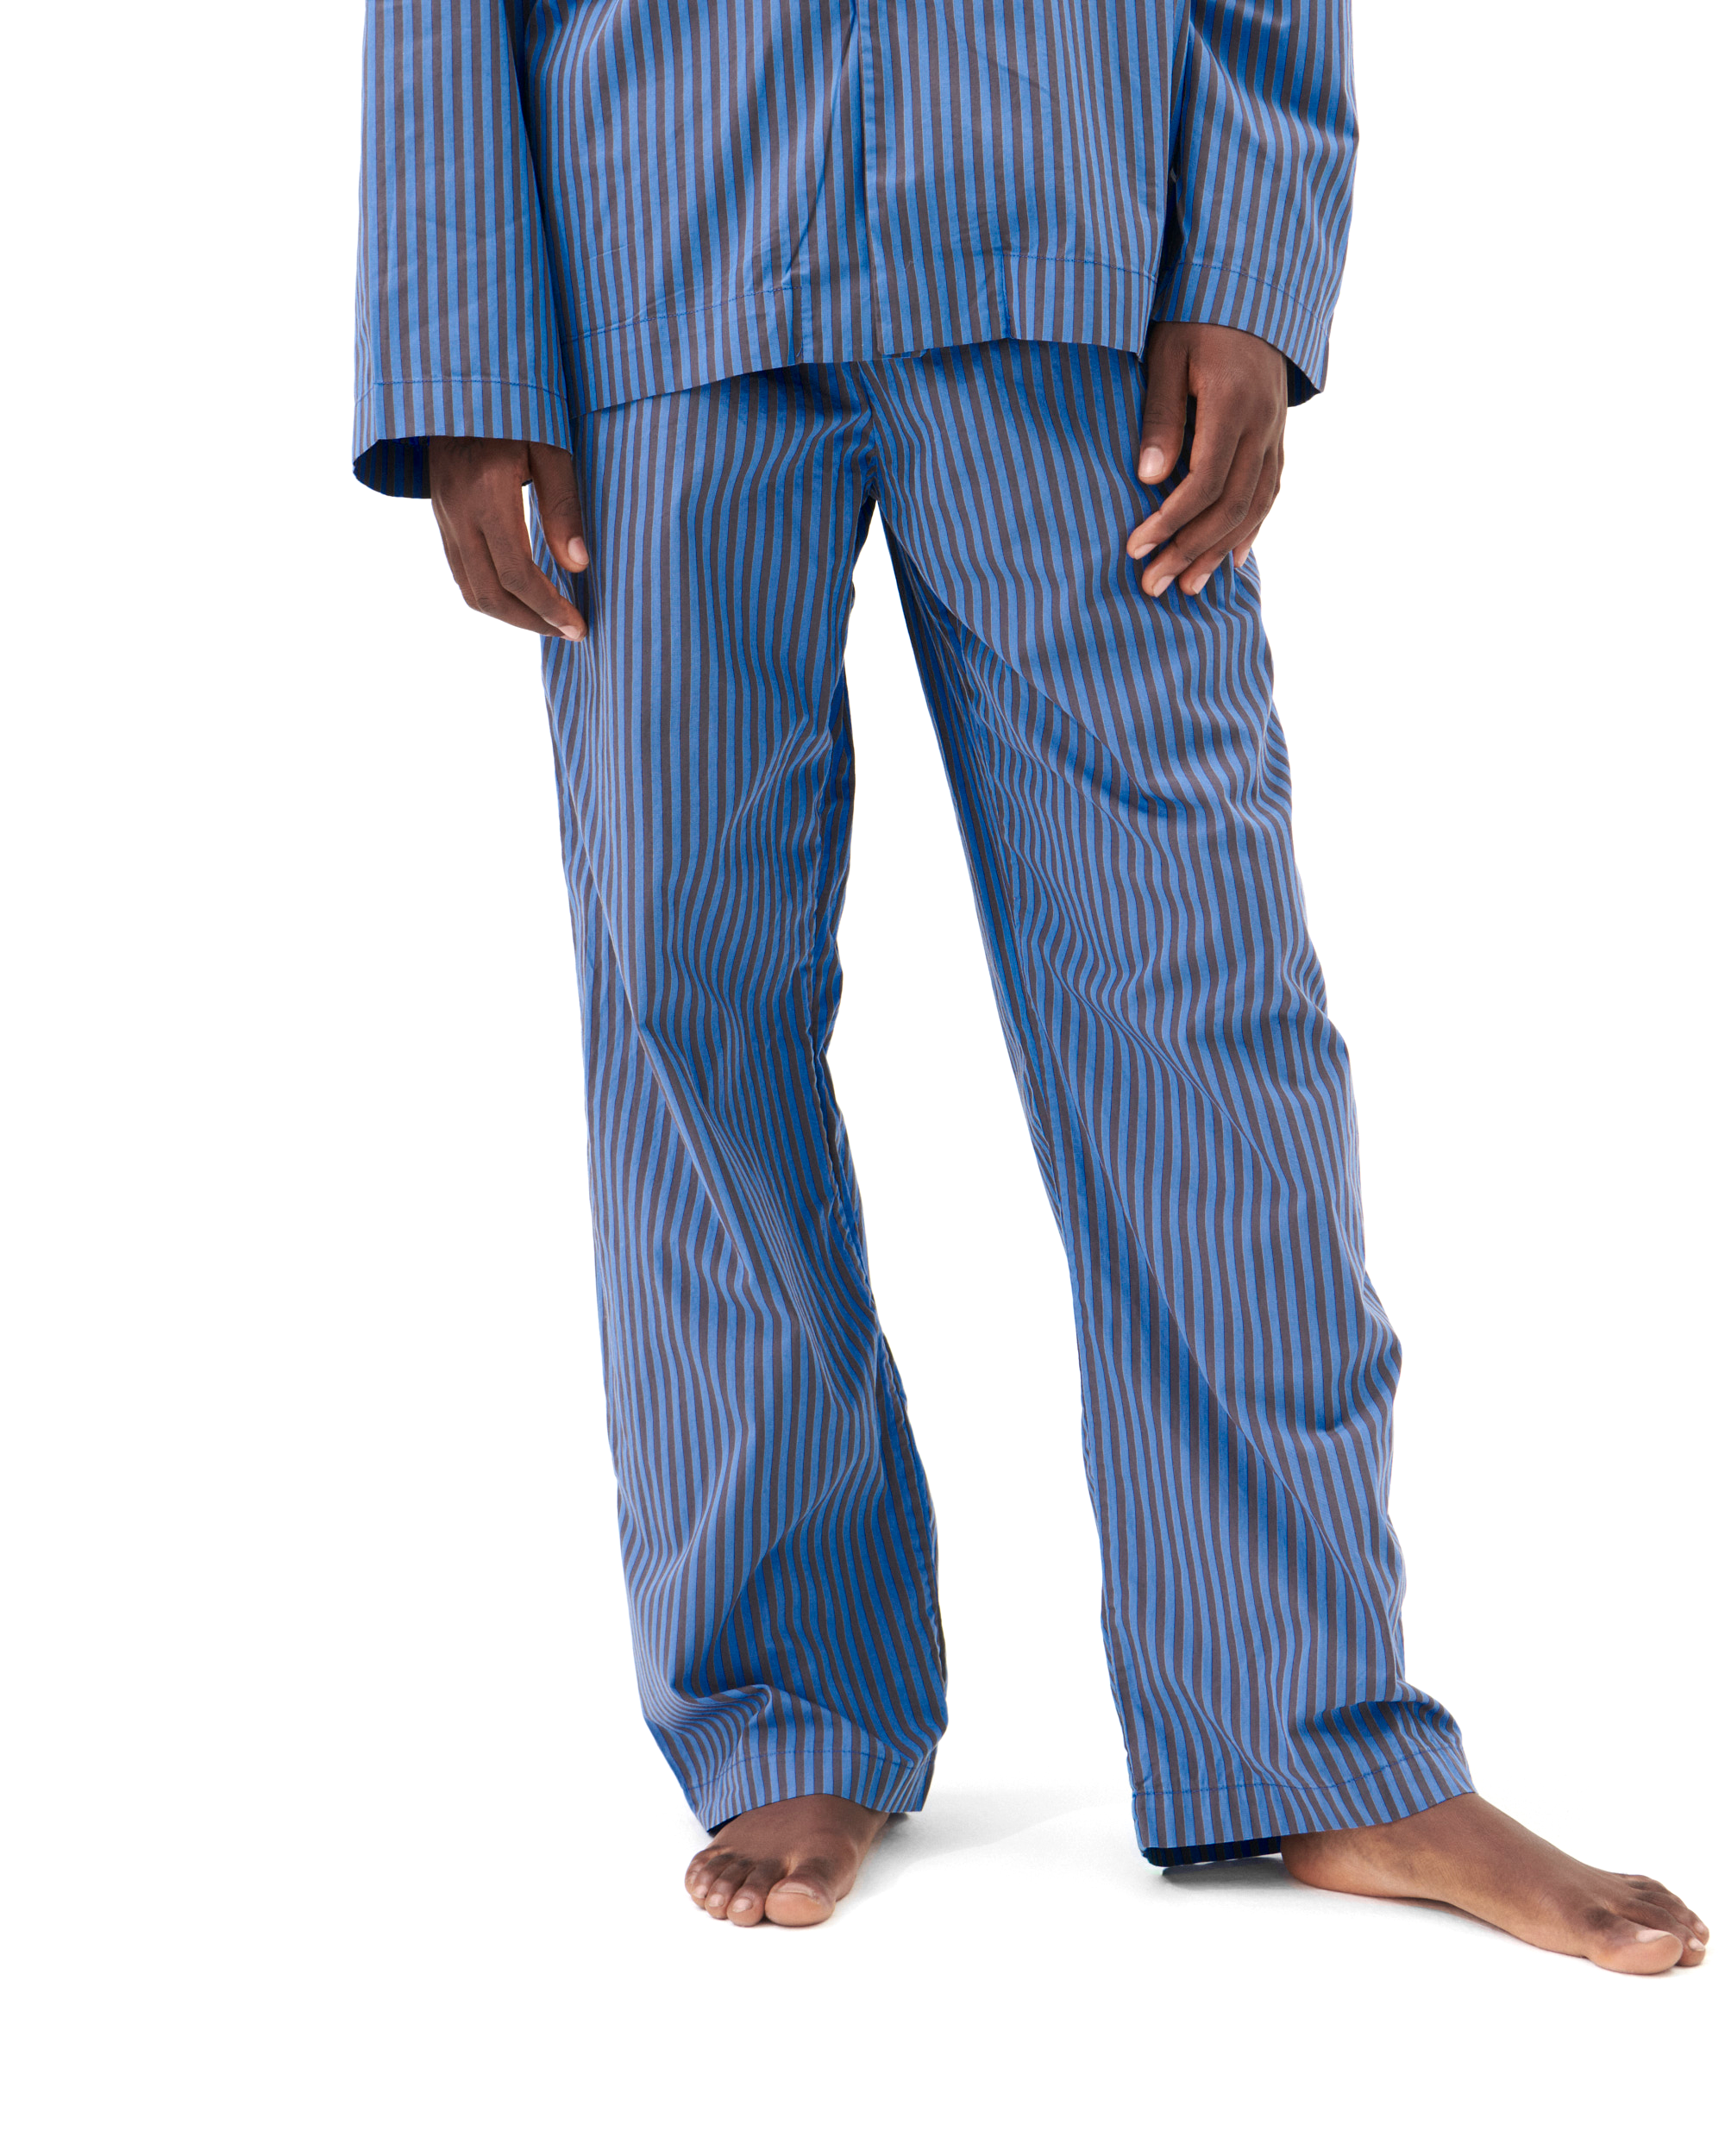 Sleepwear (Poplin) Pyjama Pant - Purple Pink